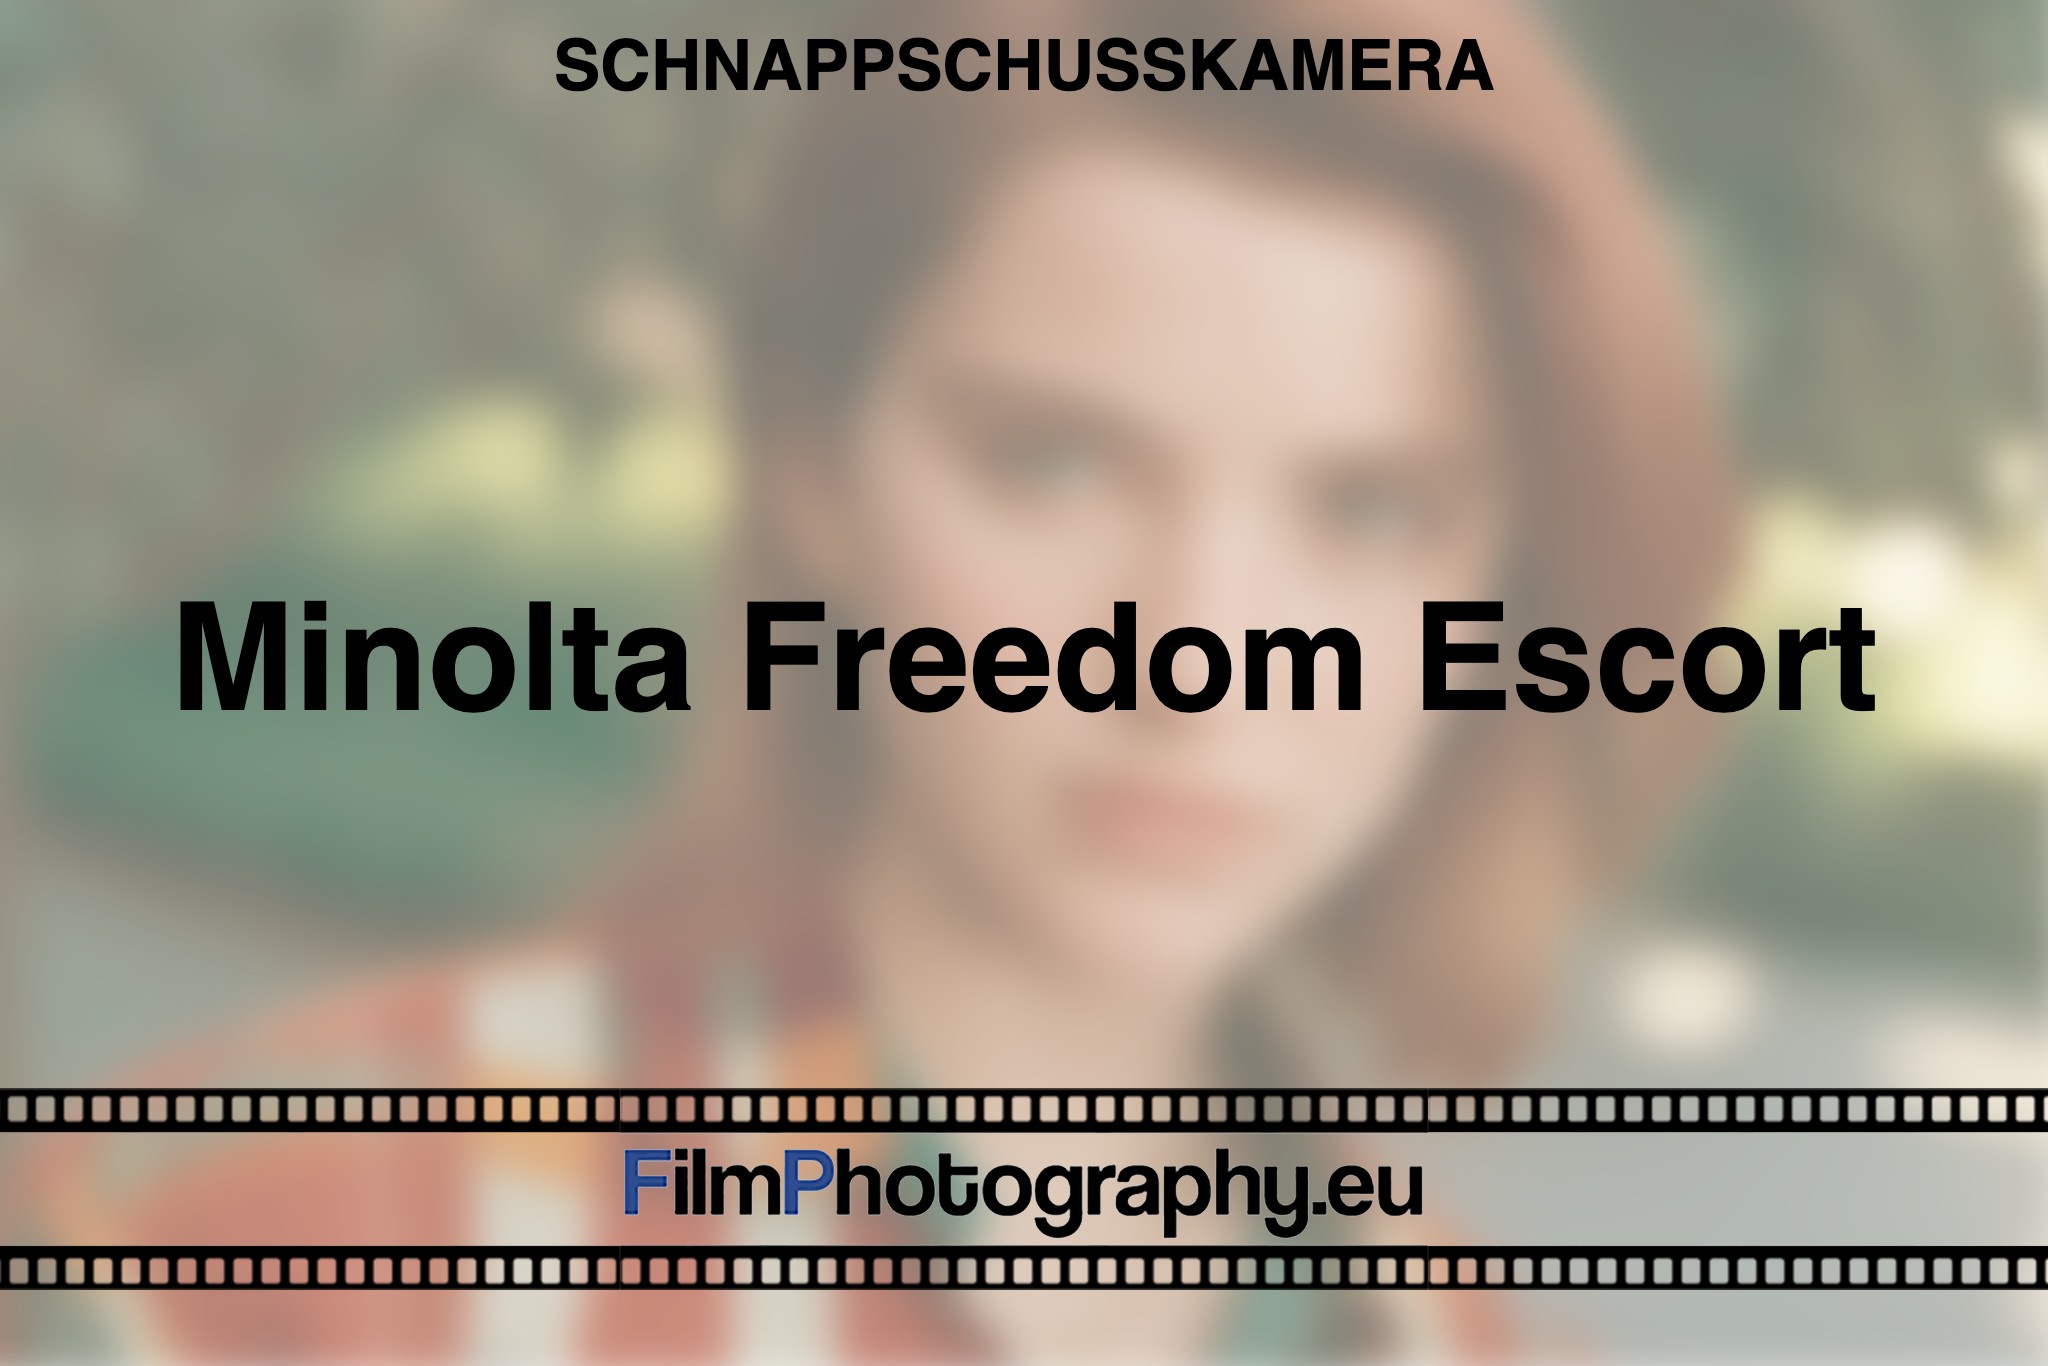 minolta-freedom-escort-schnappschusskamera-bnv